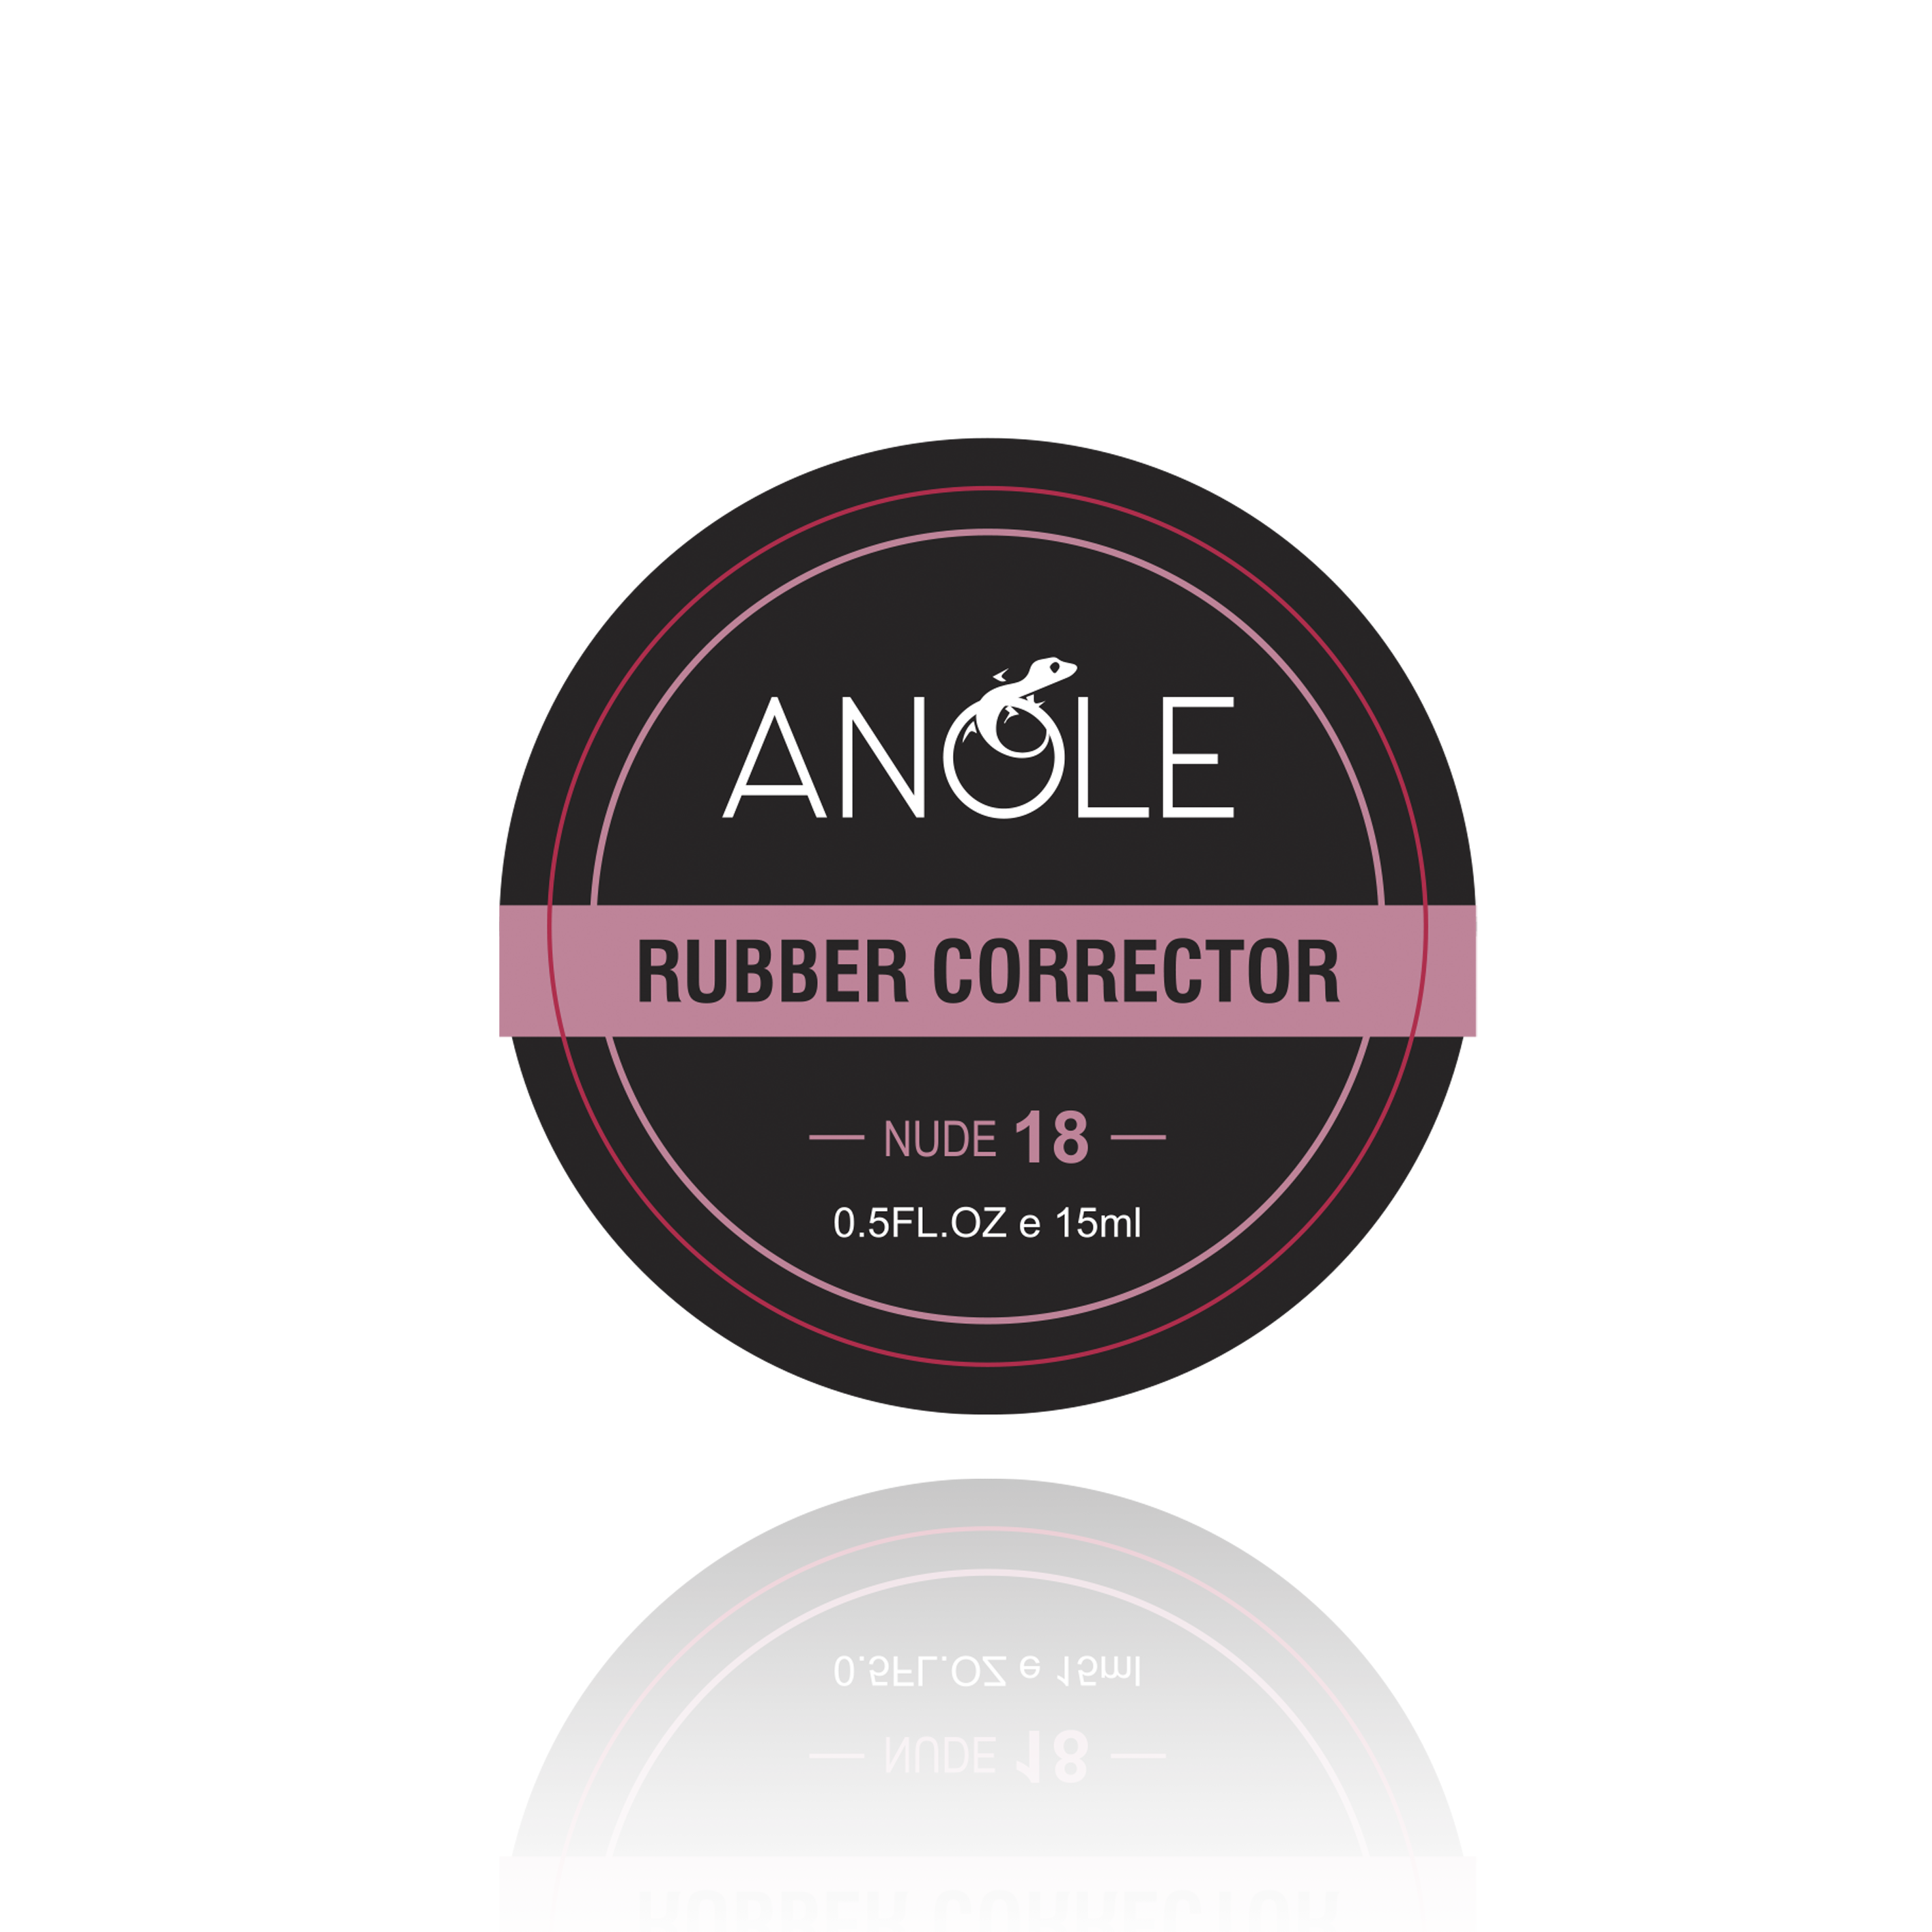 anole rubber corrector nude 18